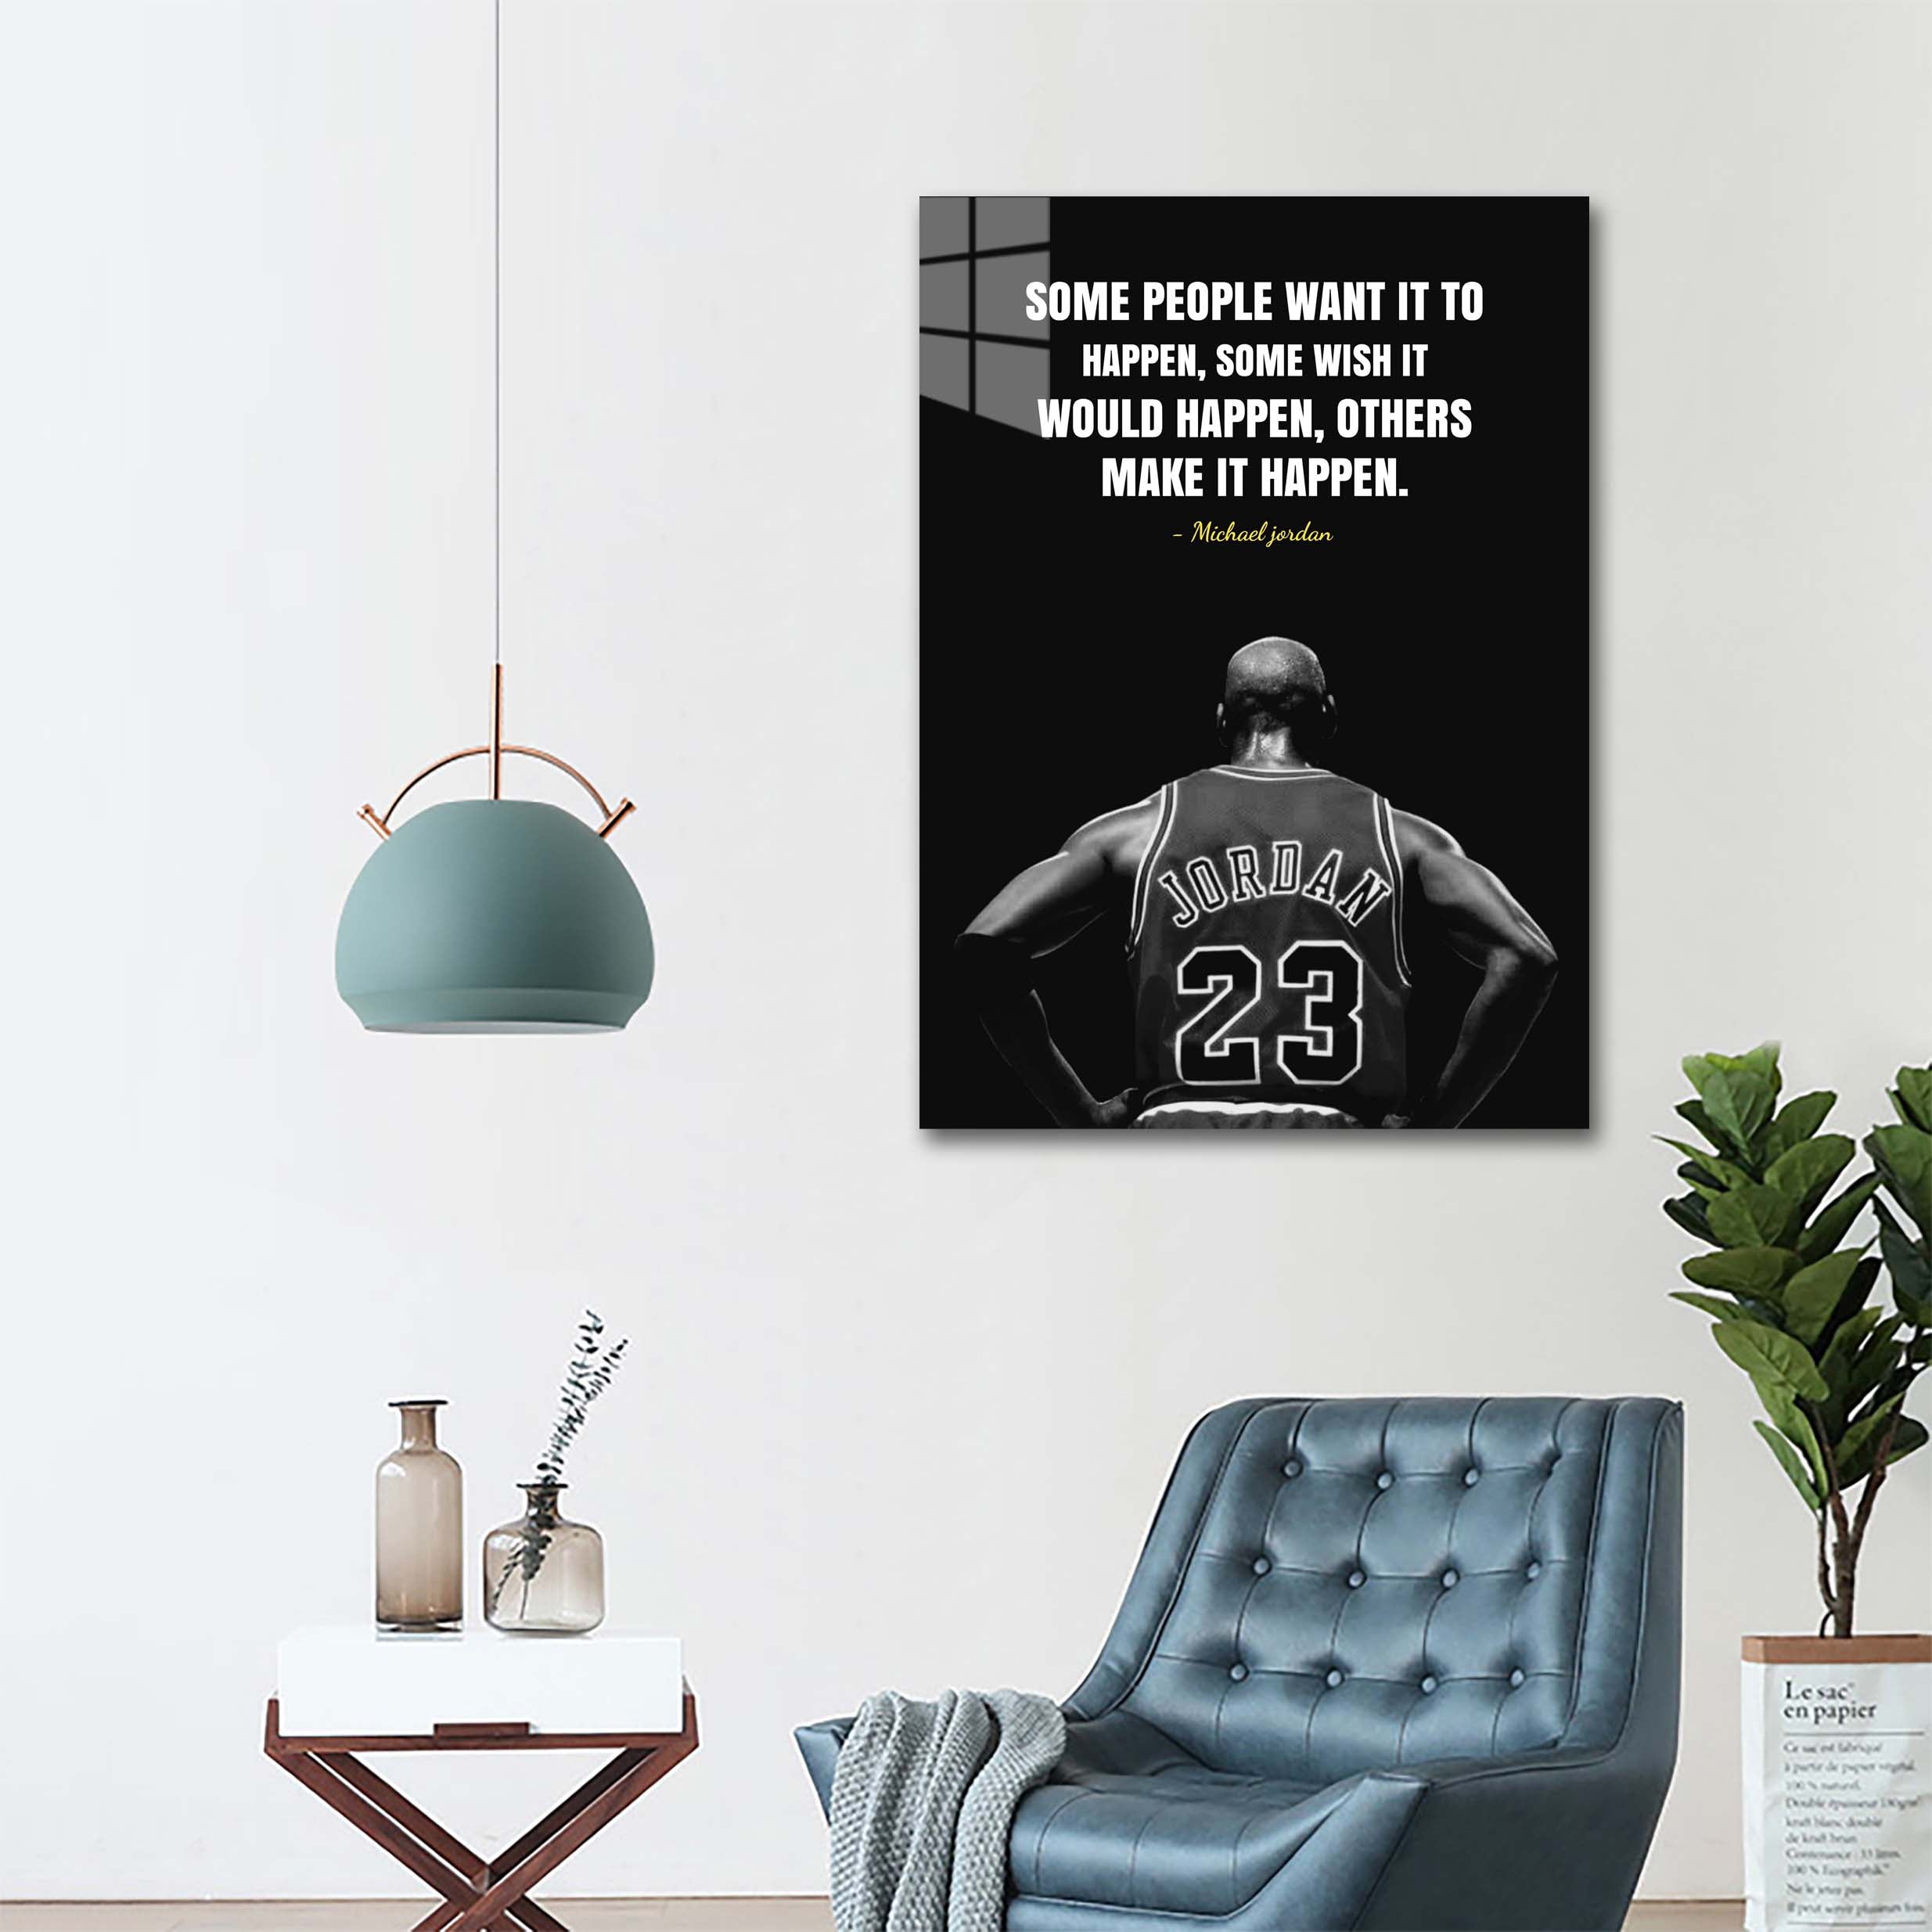 Michael Jordan quotes -designed by @Dayo Art